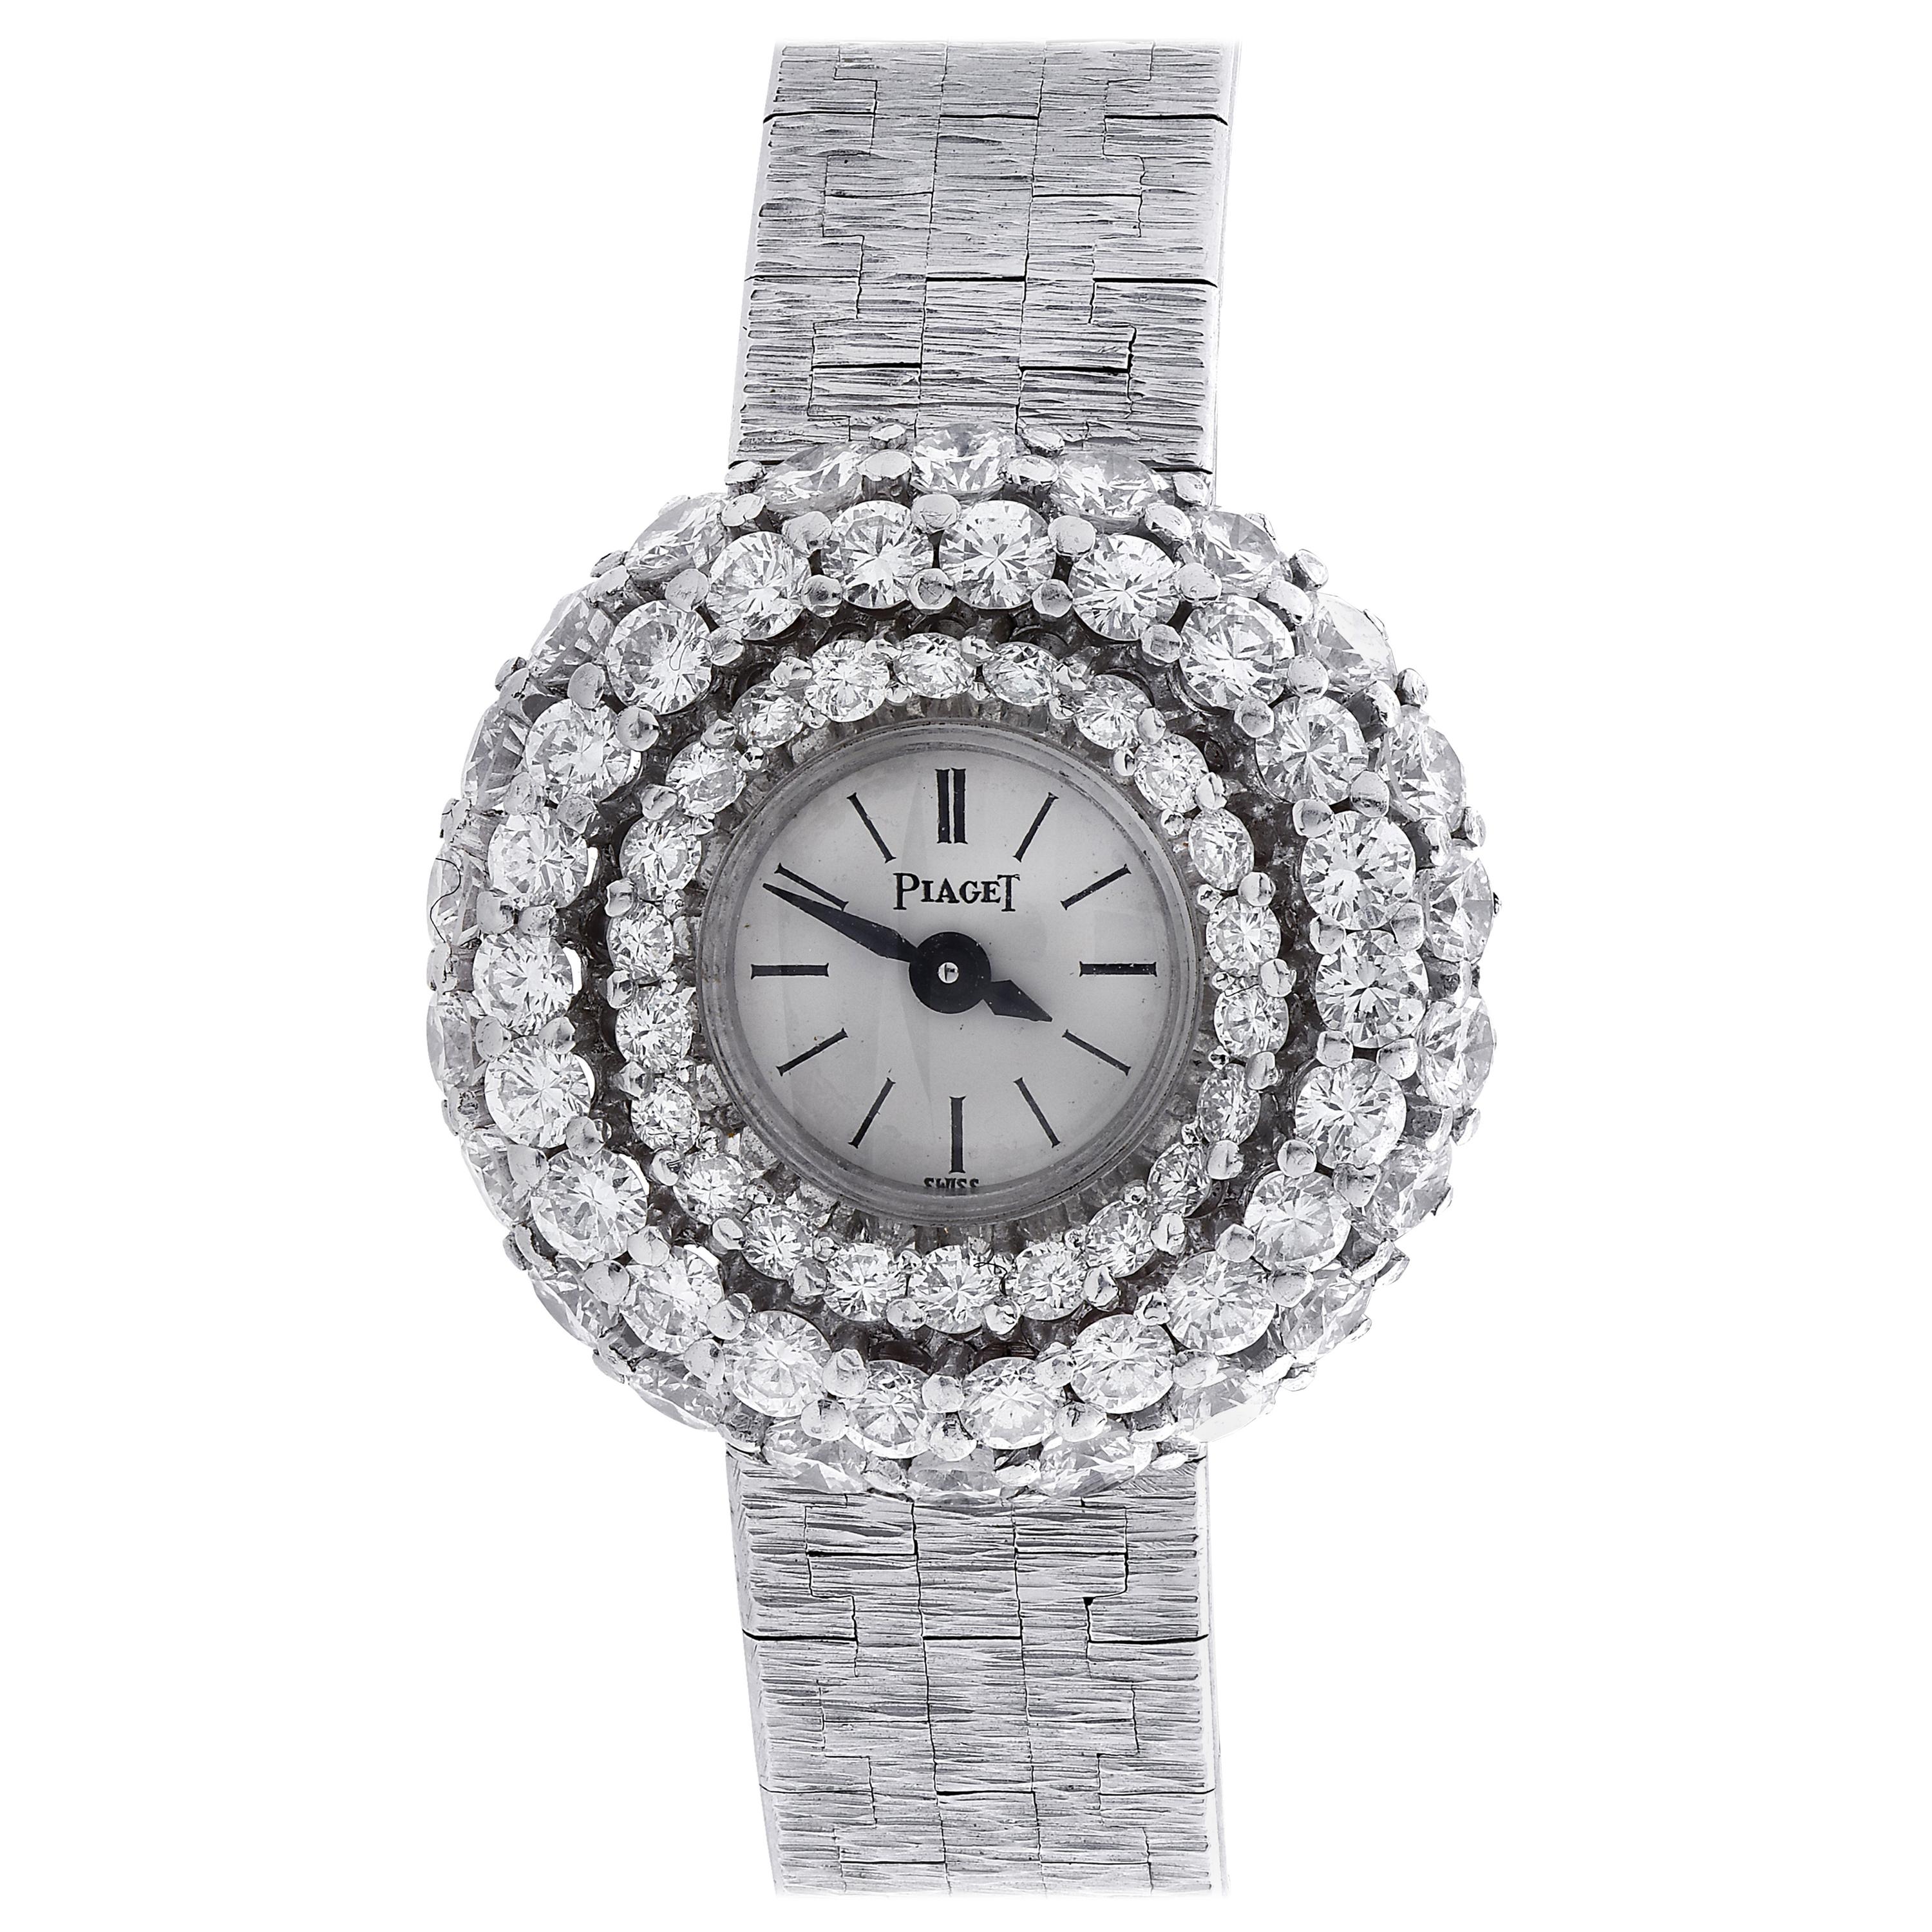 Ladies Diamond Piaget Wristwatch, circa 1970s